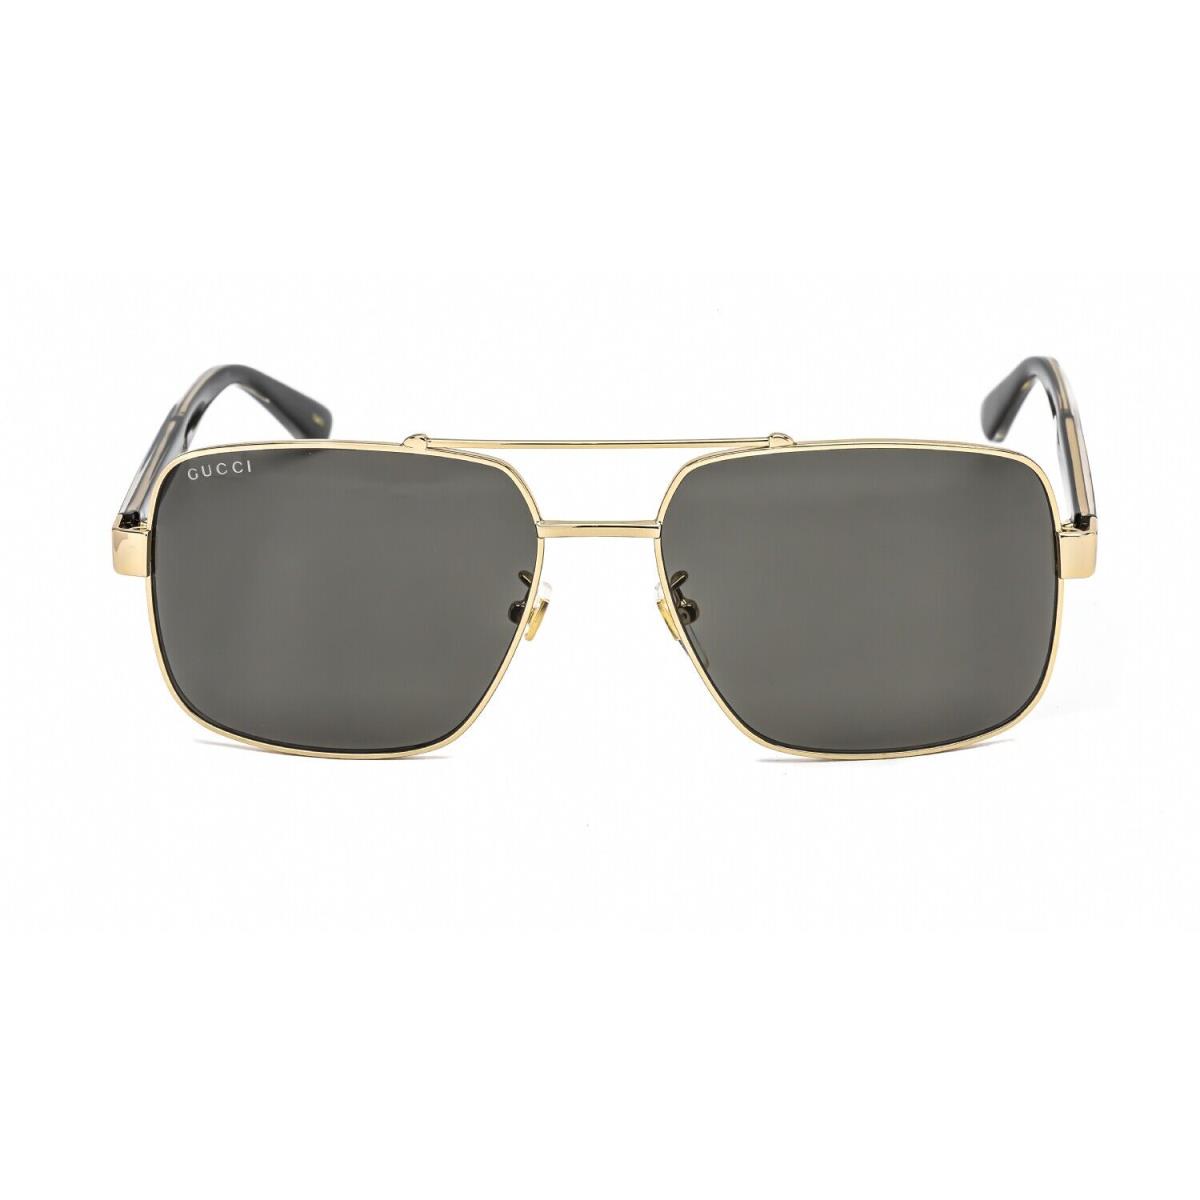 Gucci GG0529S-001-60 Sunglasses Size 60mm 145mm 17mm Gold Men